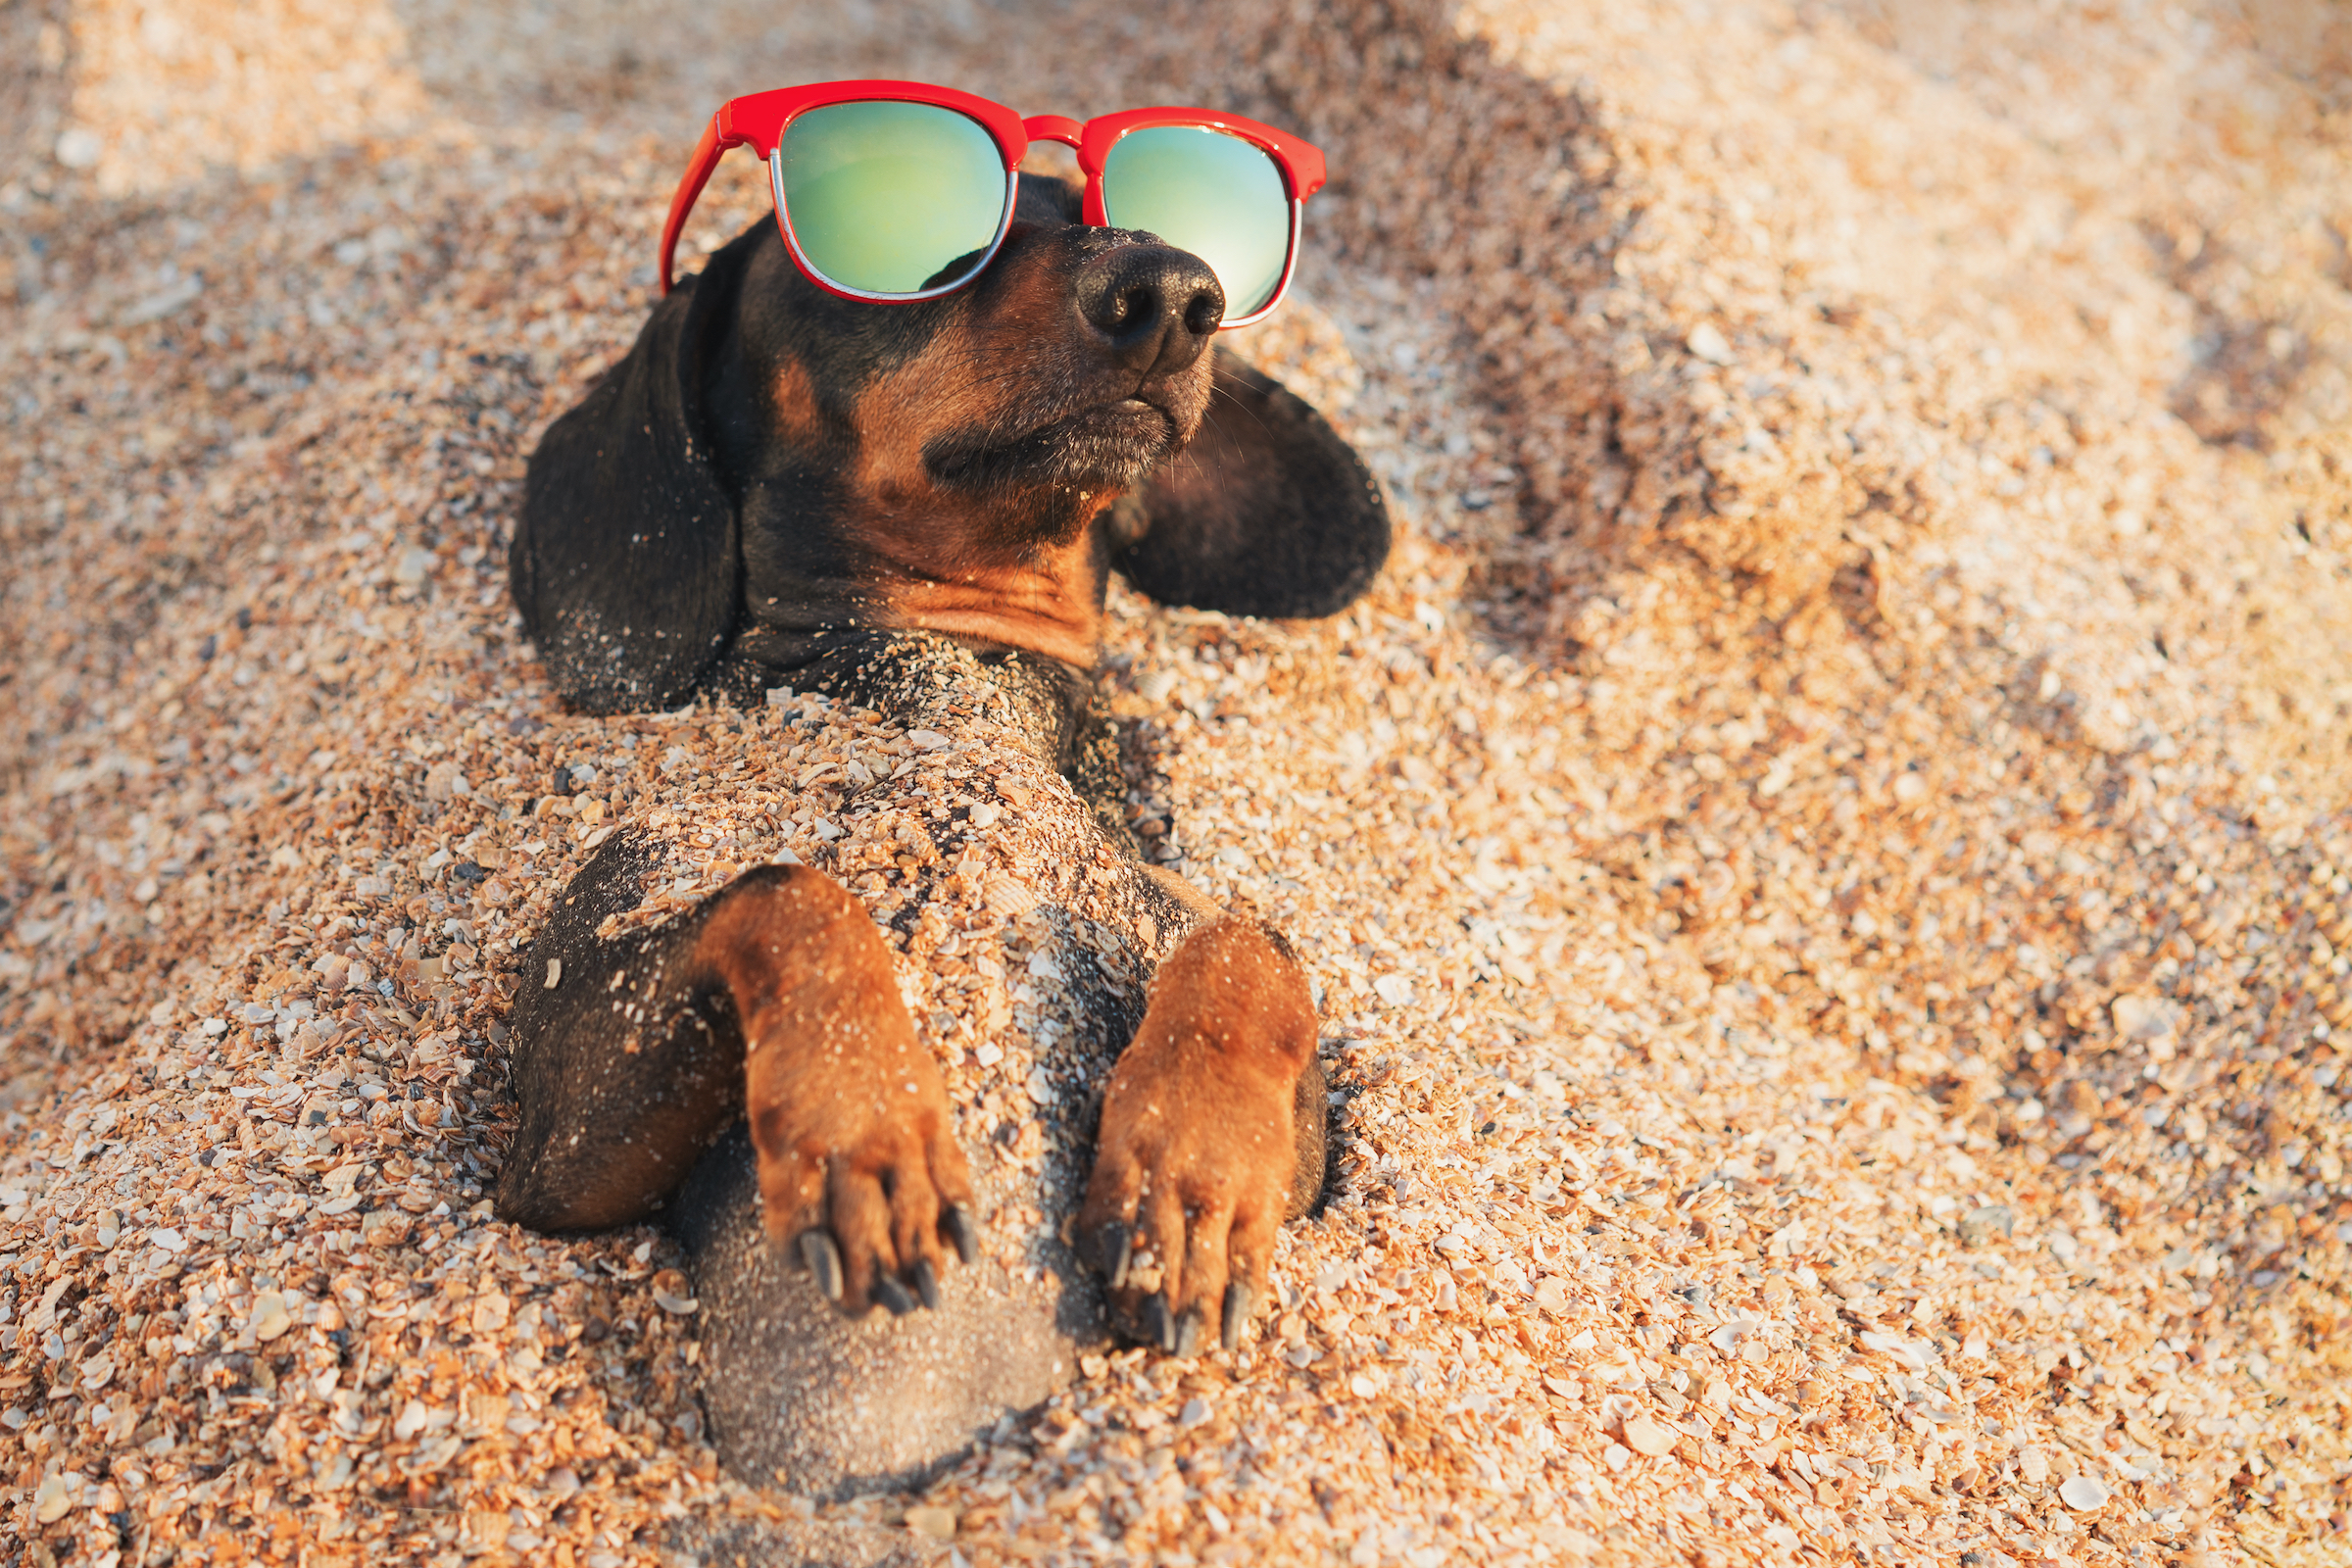 A Dachshund dog lies half buried in the sand on a beach, wearing sunglasses